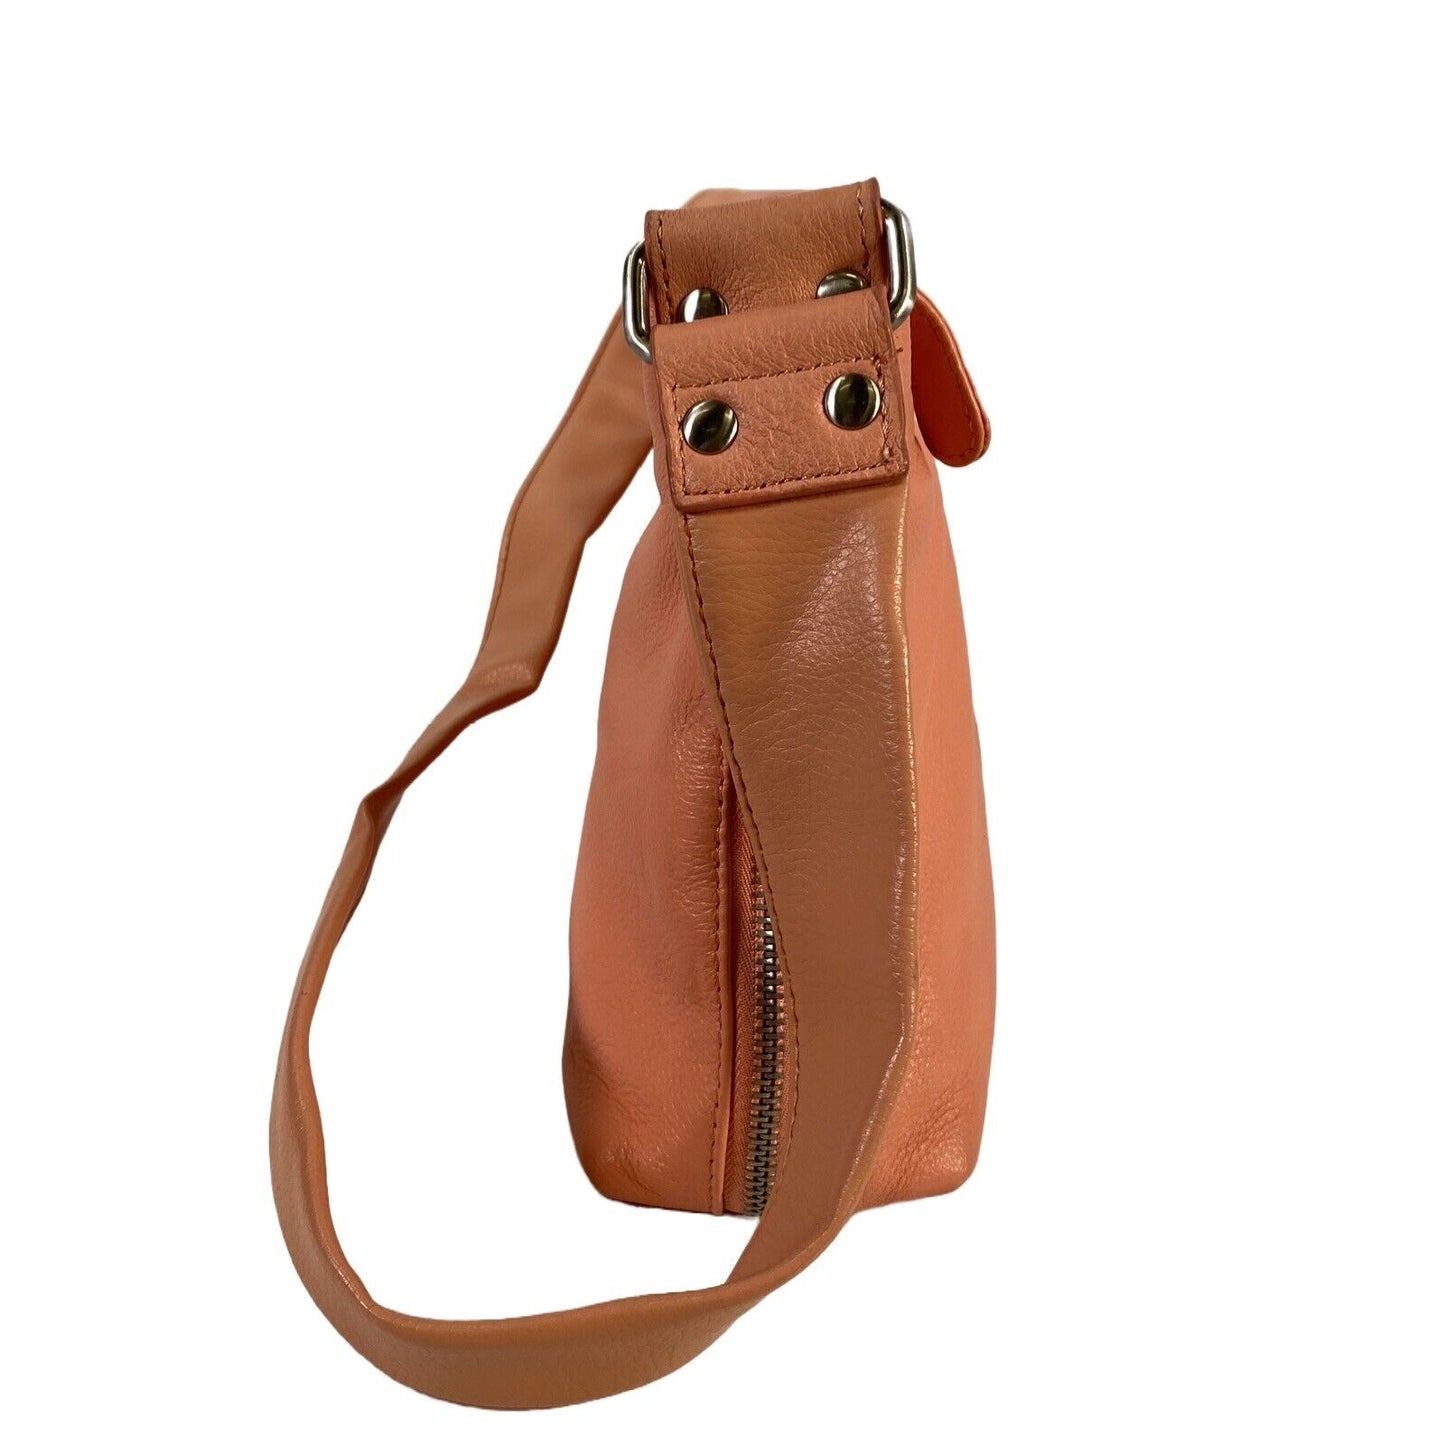 Stone & Co Women's Pink Leather Shoulder Bag Purse